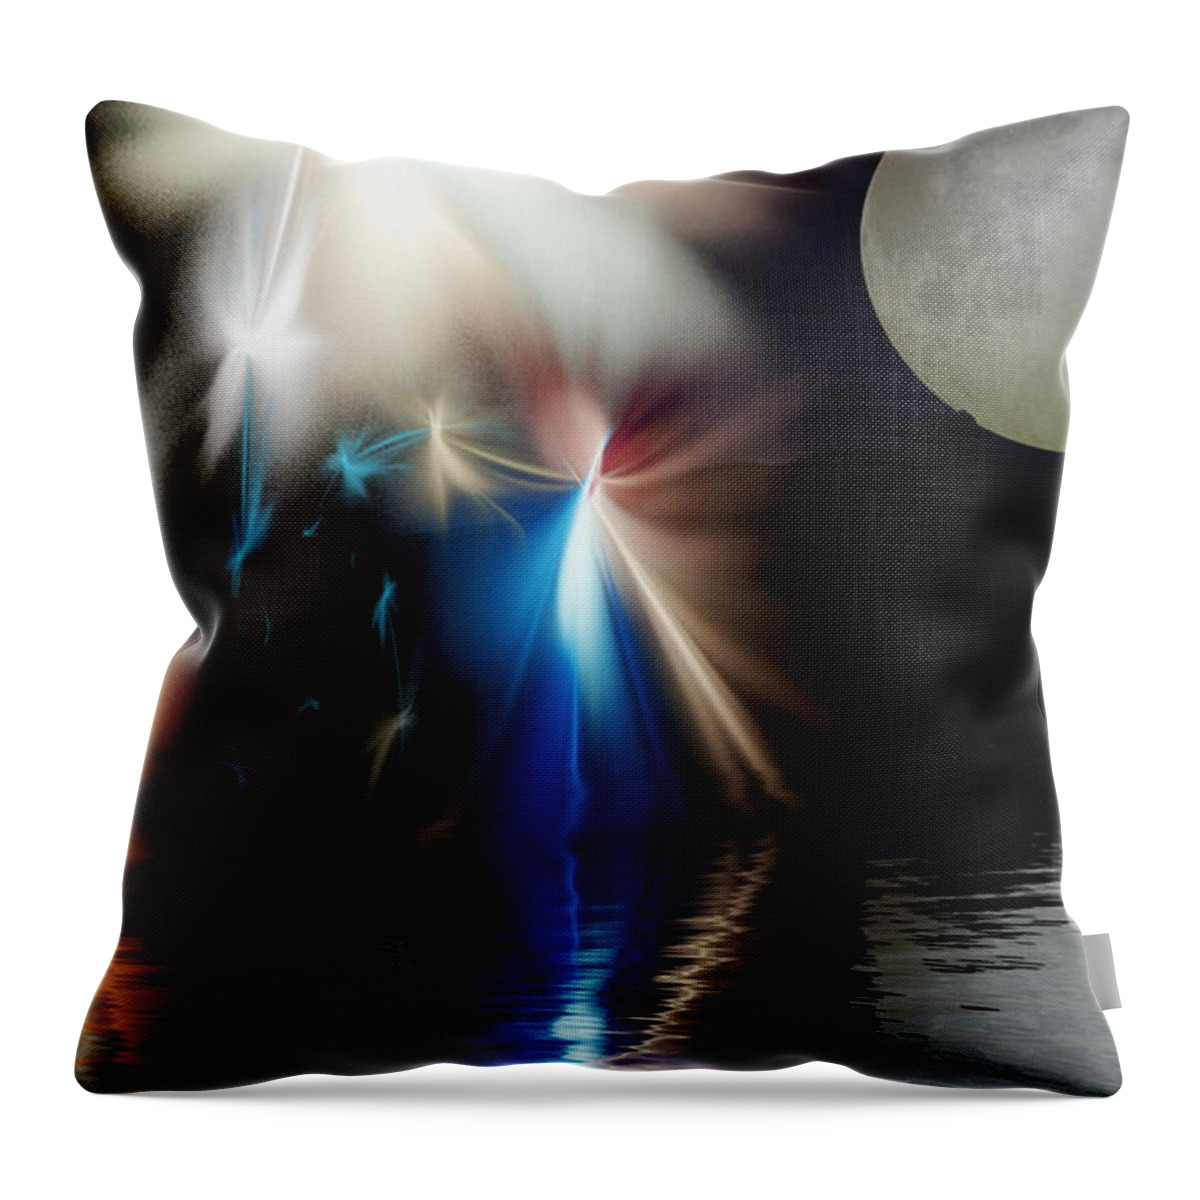 Digital Painting Throw Pillow featuring the digital art Fairy's Moonlight Ball by David Lane